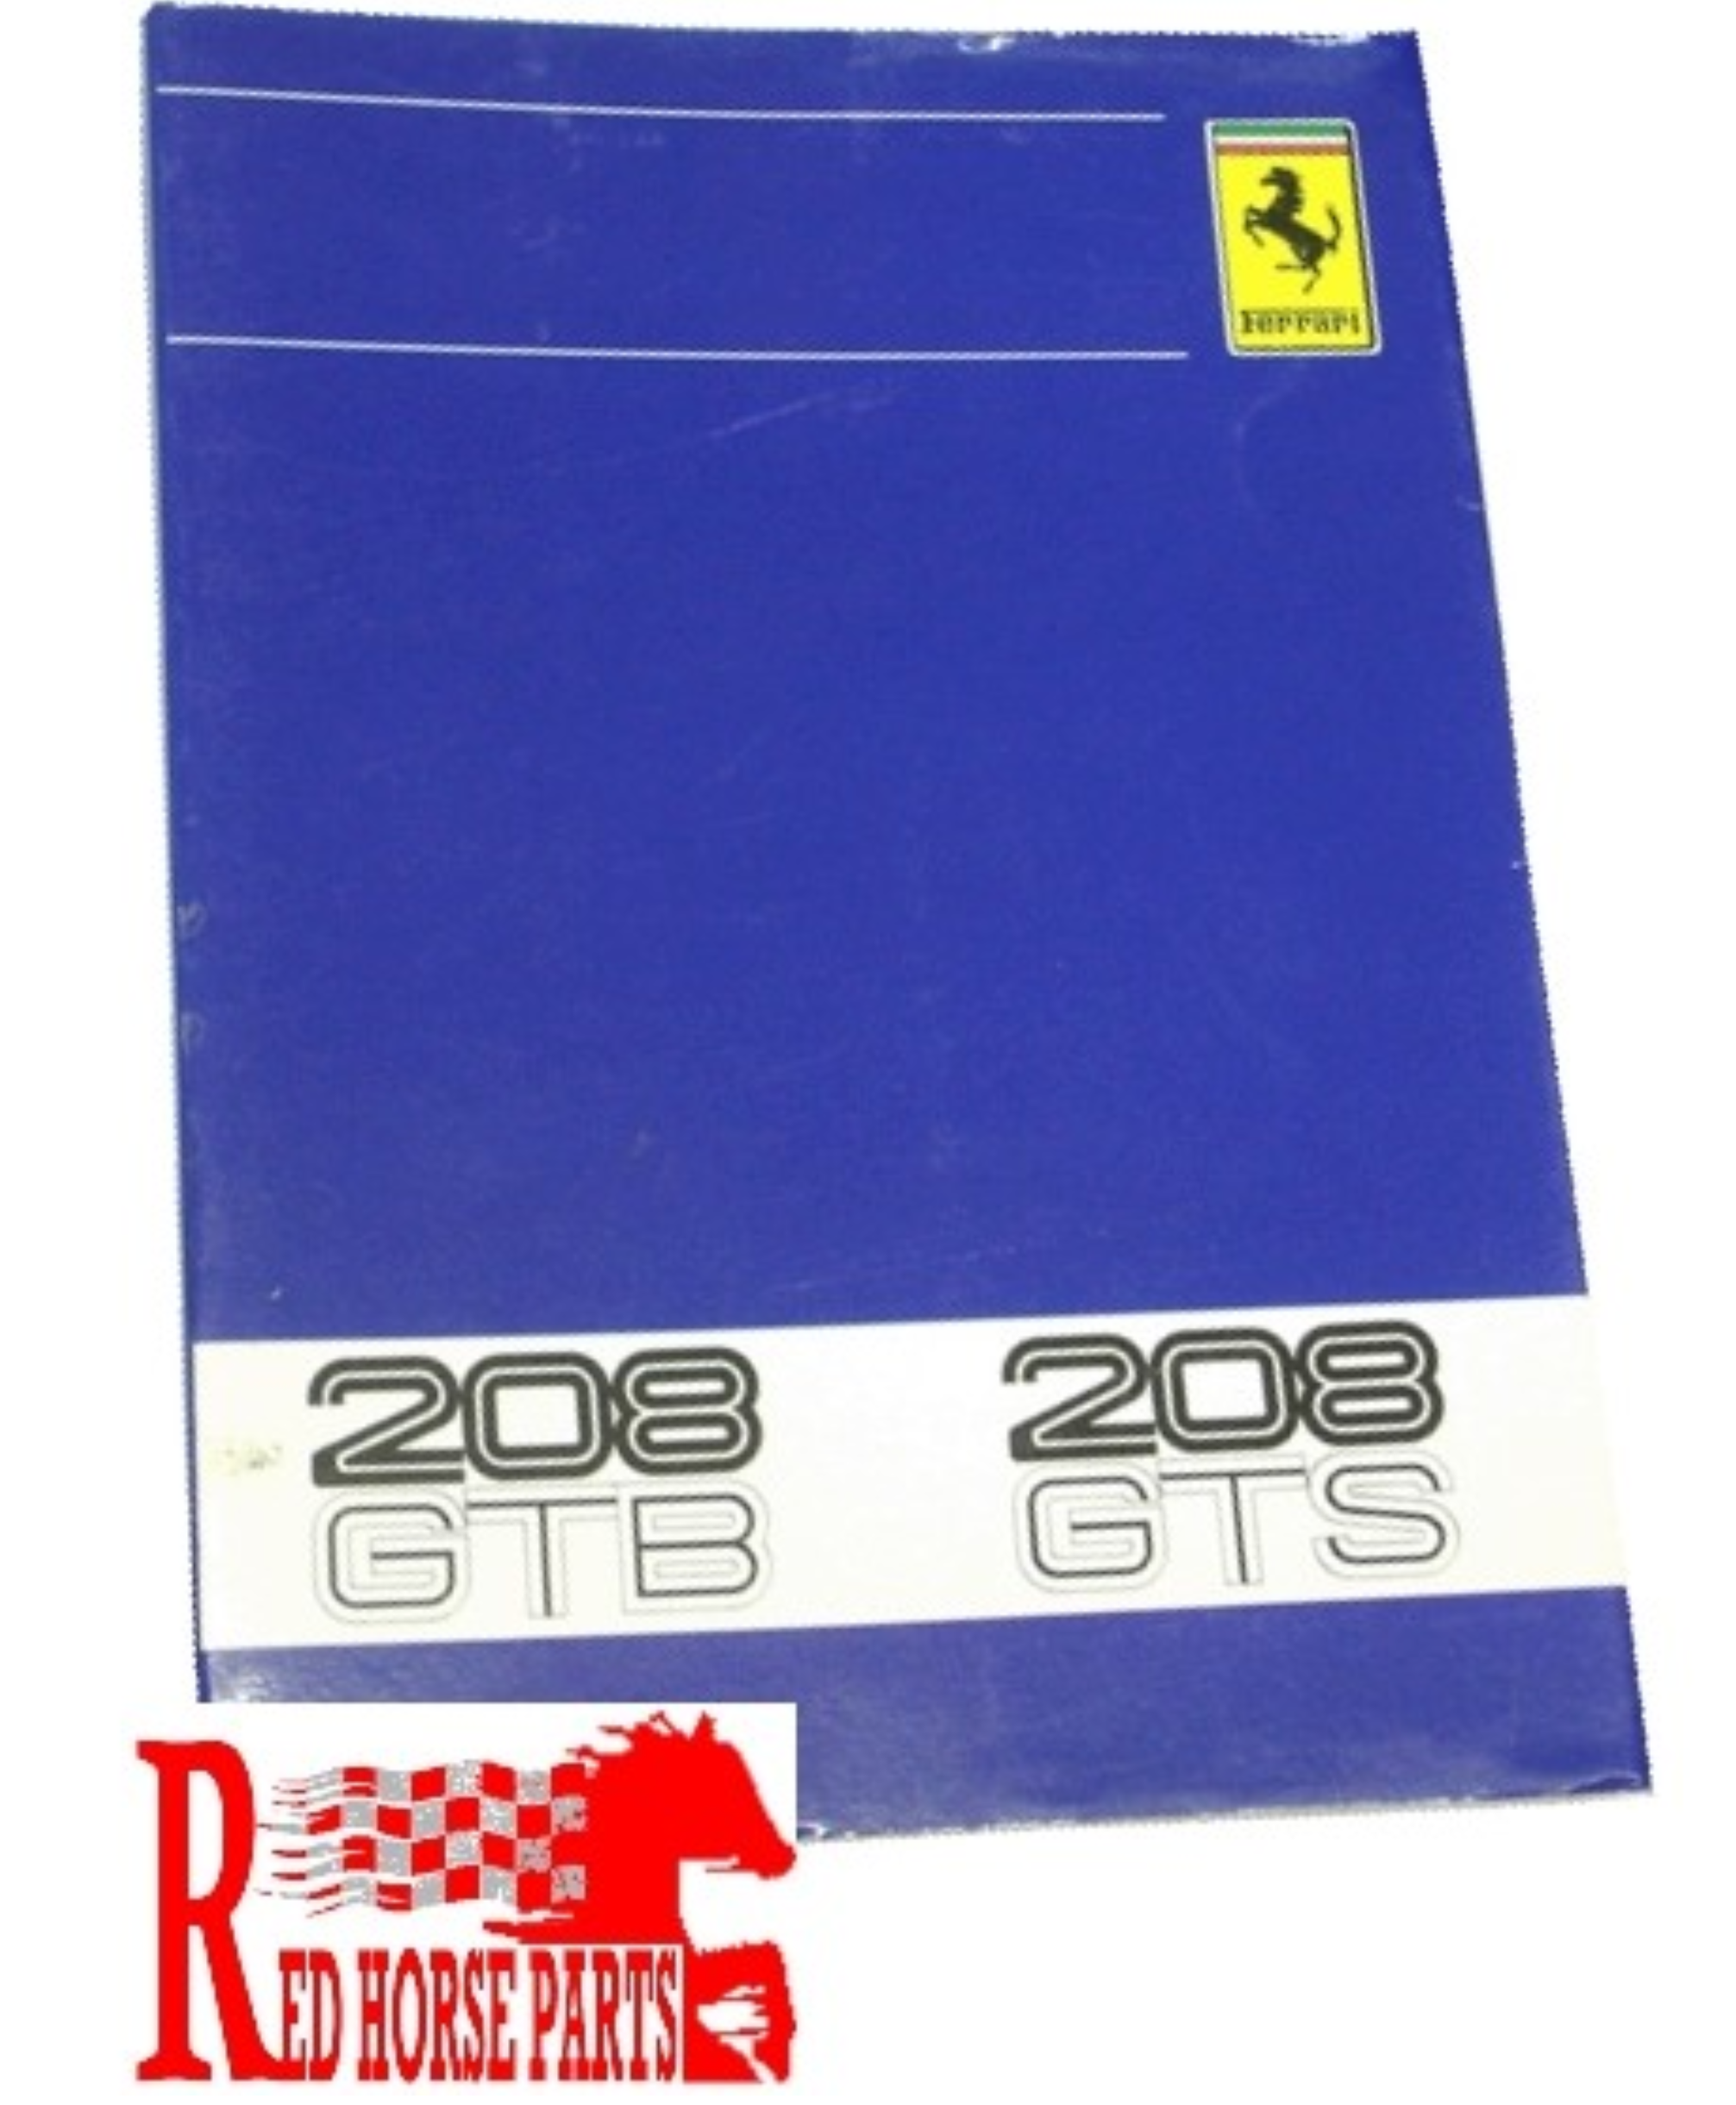 Ferrari 208 owners manual